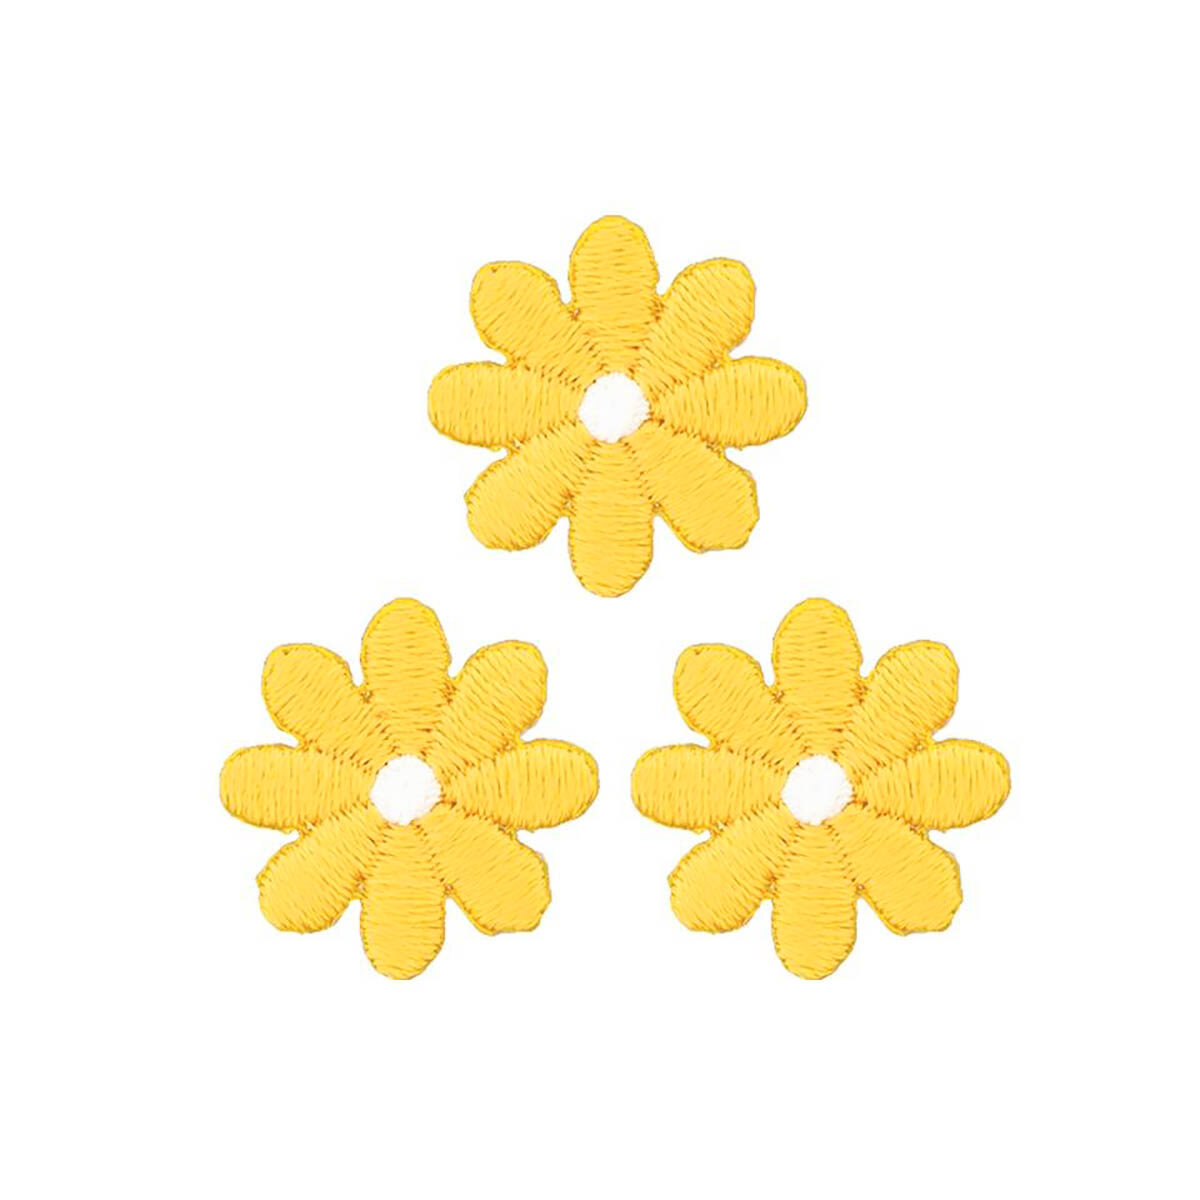 926721 Термоаппликация Цветы малые, желтый, Prym